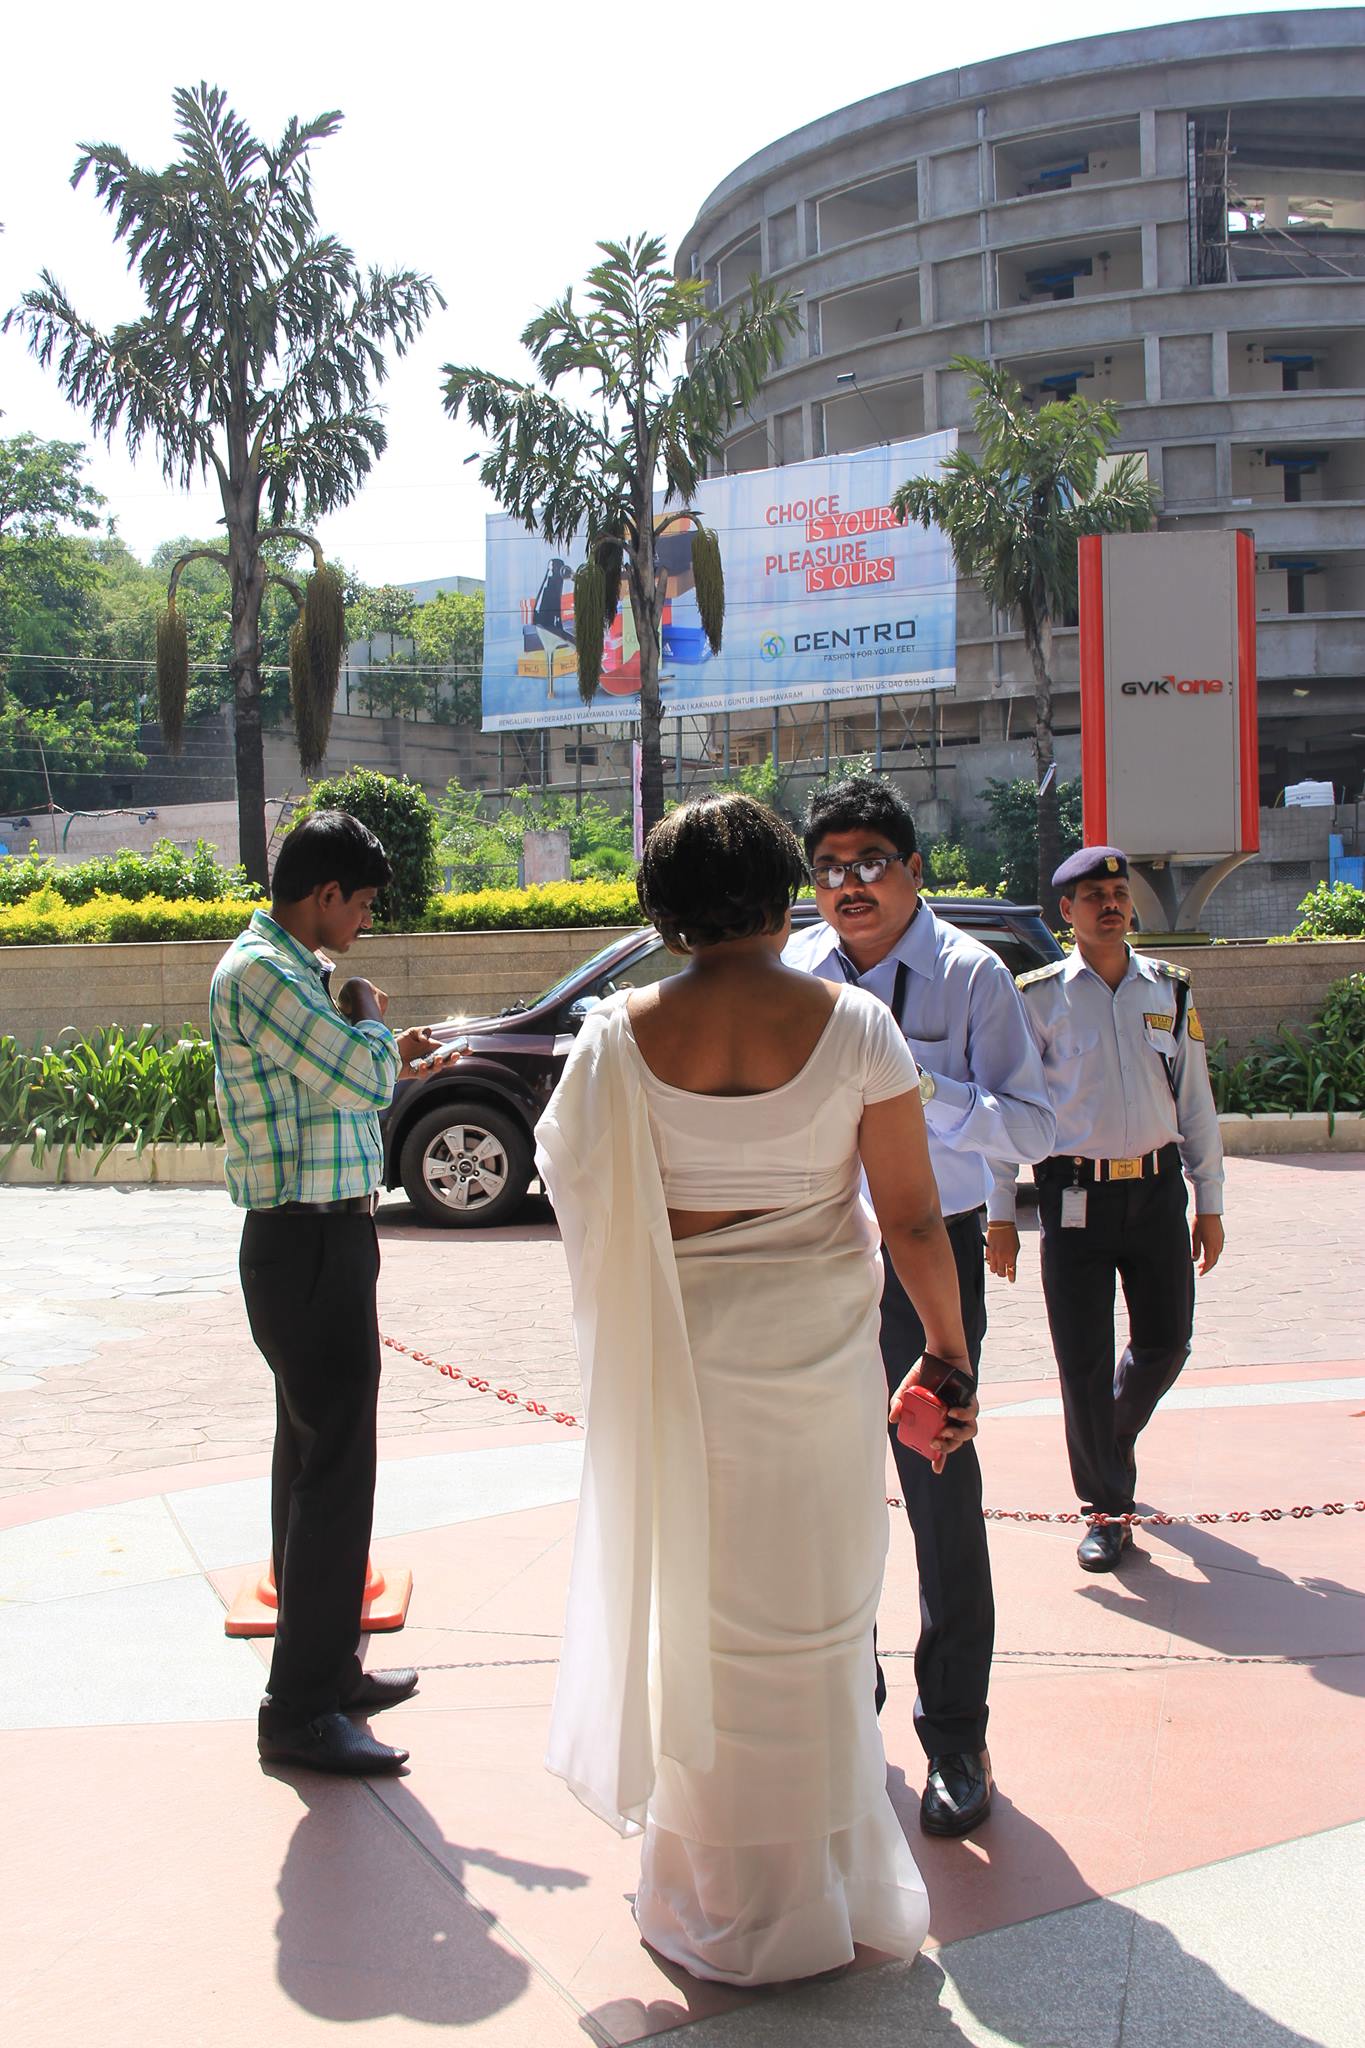 Transperson denied enrty inside Mall in Hyderabad